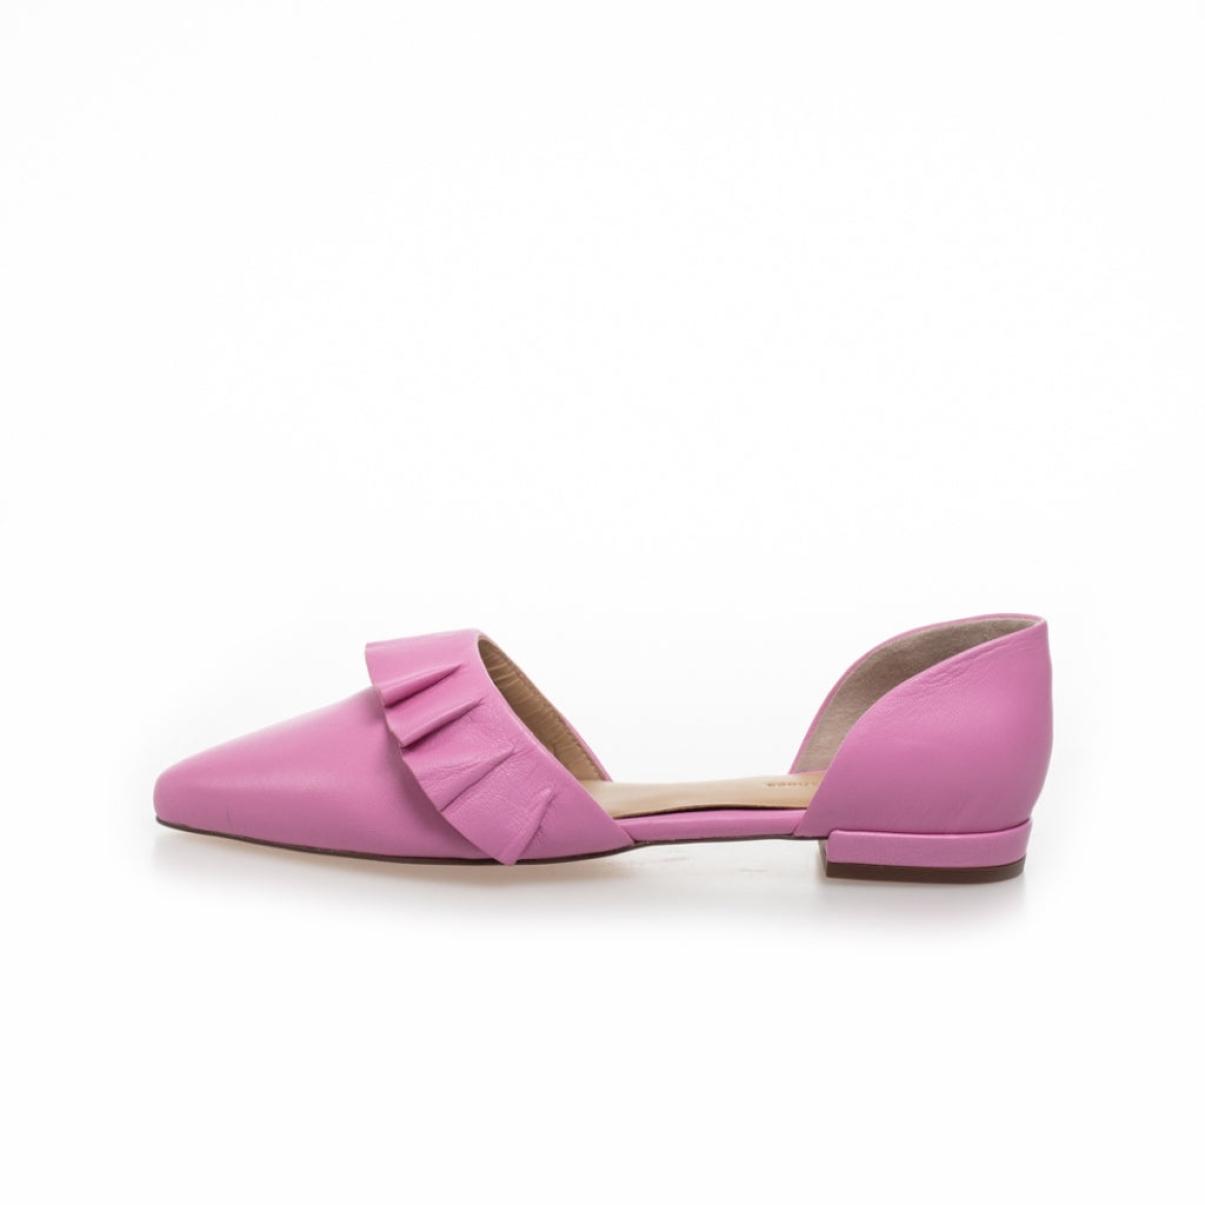 Copenhagen Shoes Ballerina Delicate New Romance 23 Leather - Pink Women